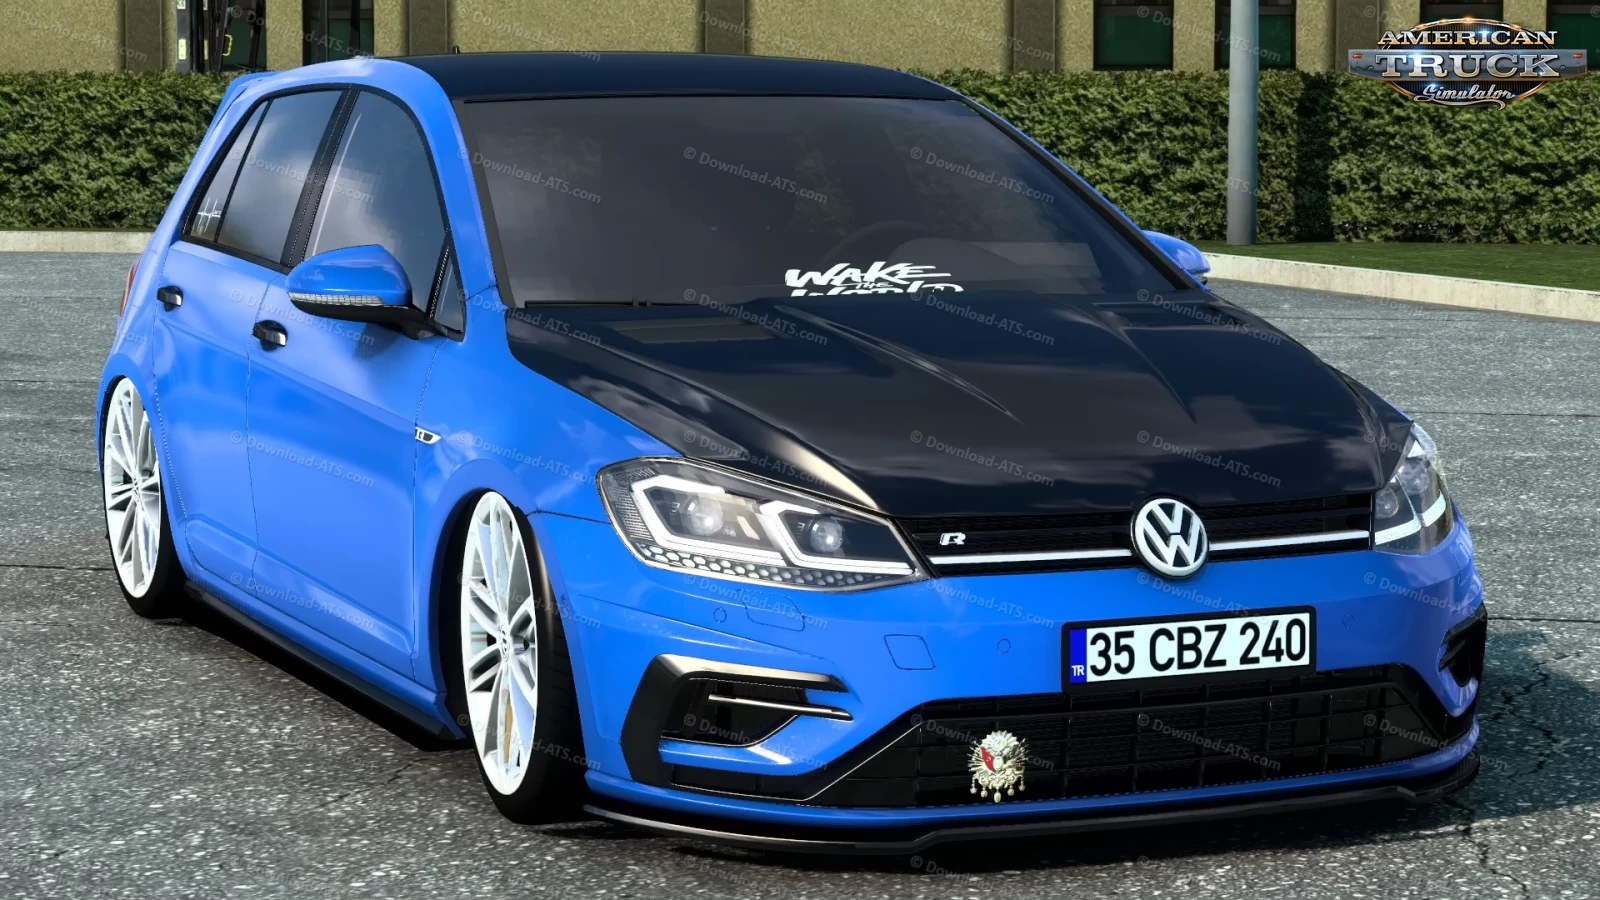 Volkswagen Golf R-Line 7.5 2018 v1.6 (1.48.x) for ATS